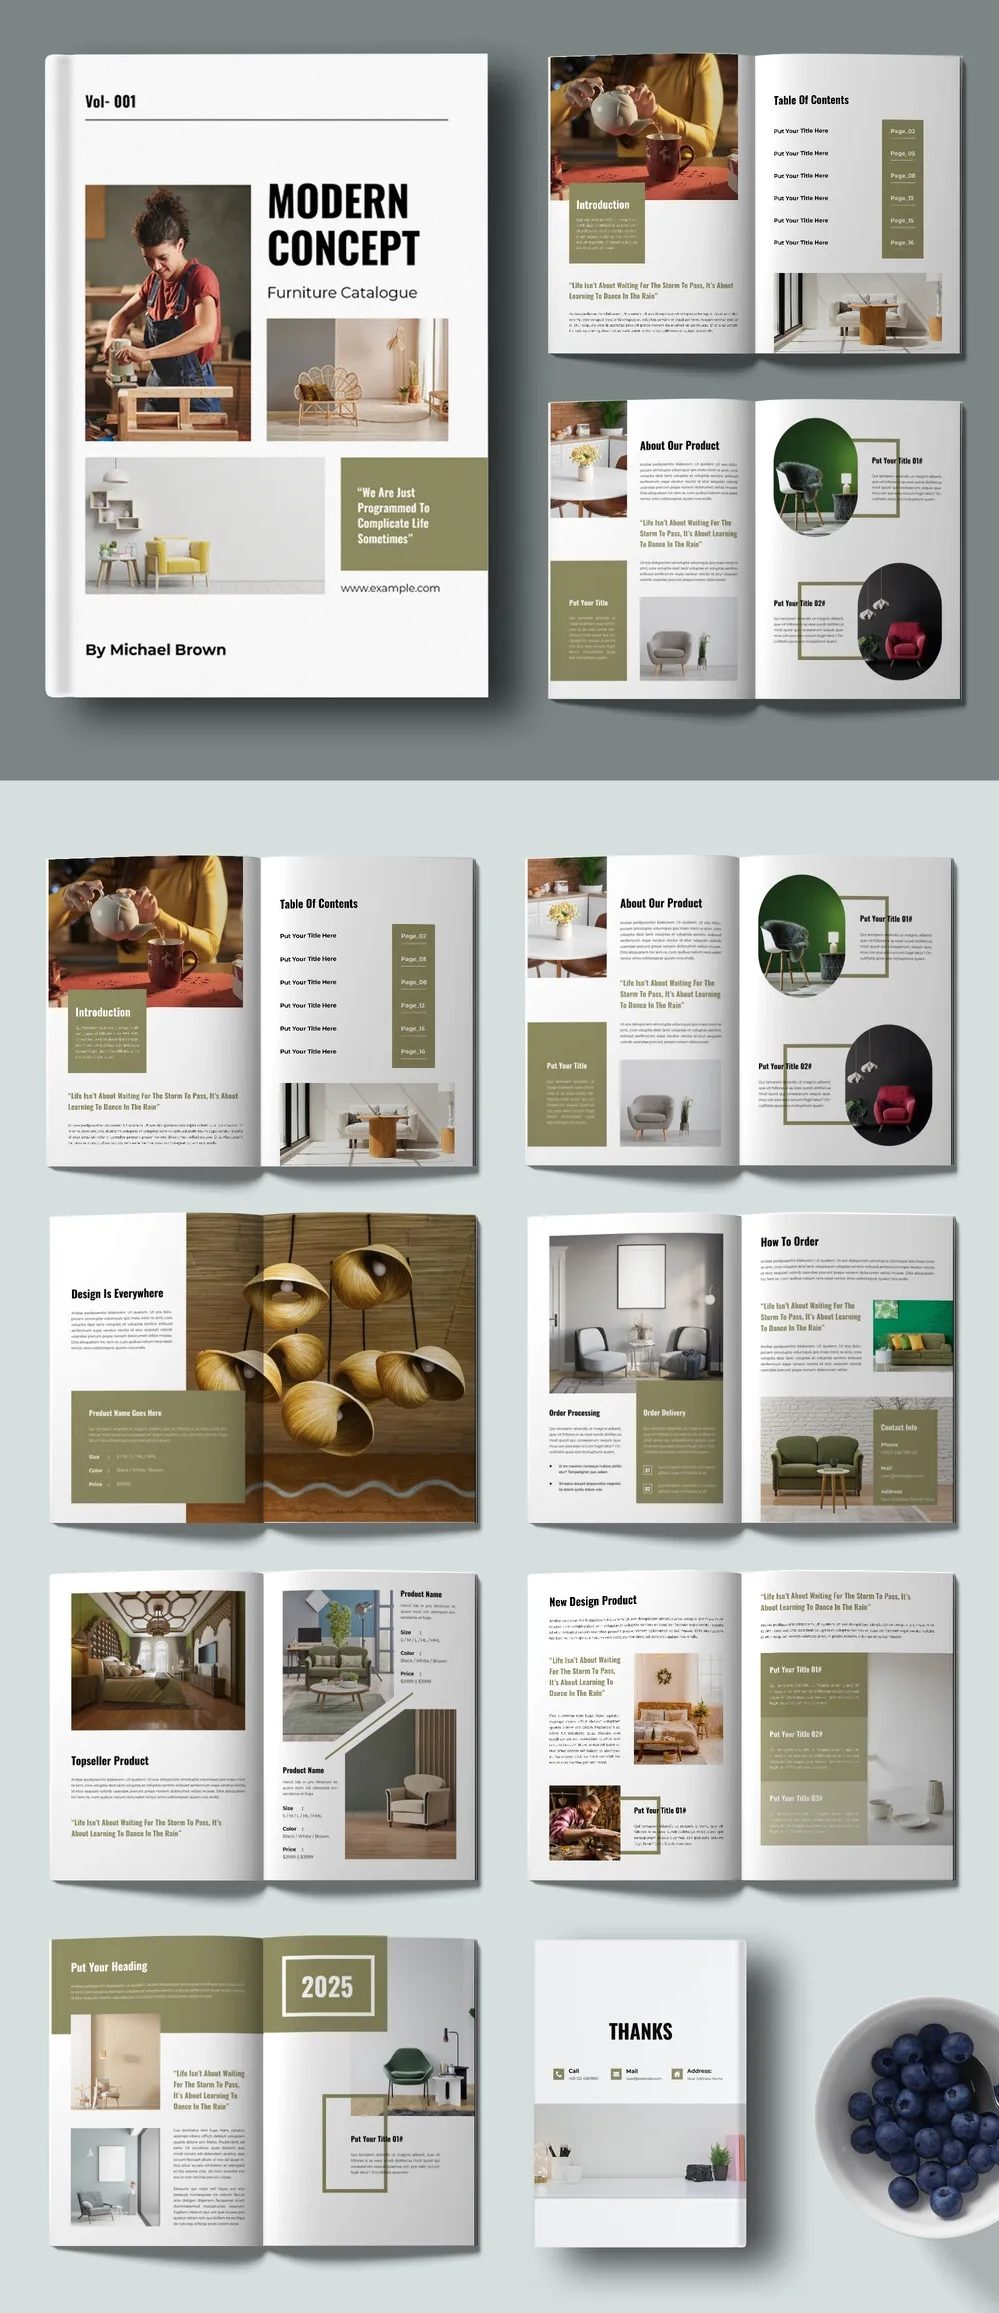 Adobestock - Furniture Catalogue Template Layout 739429680